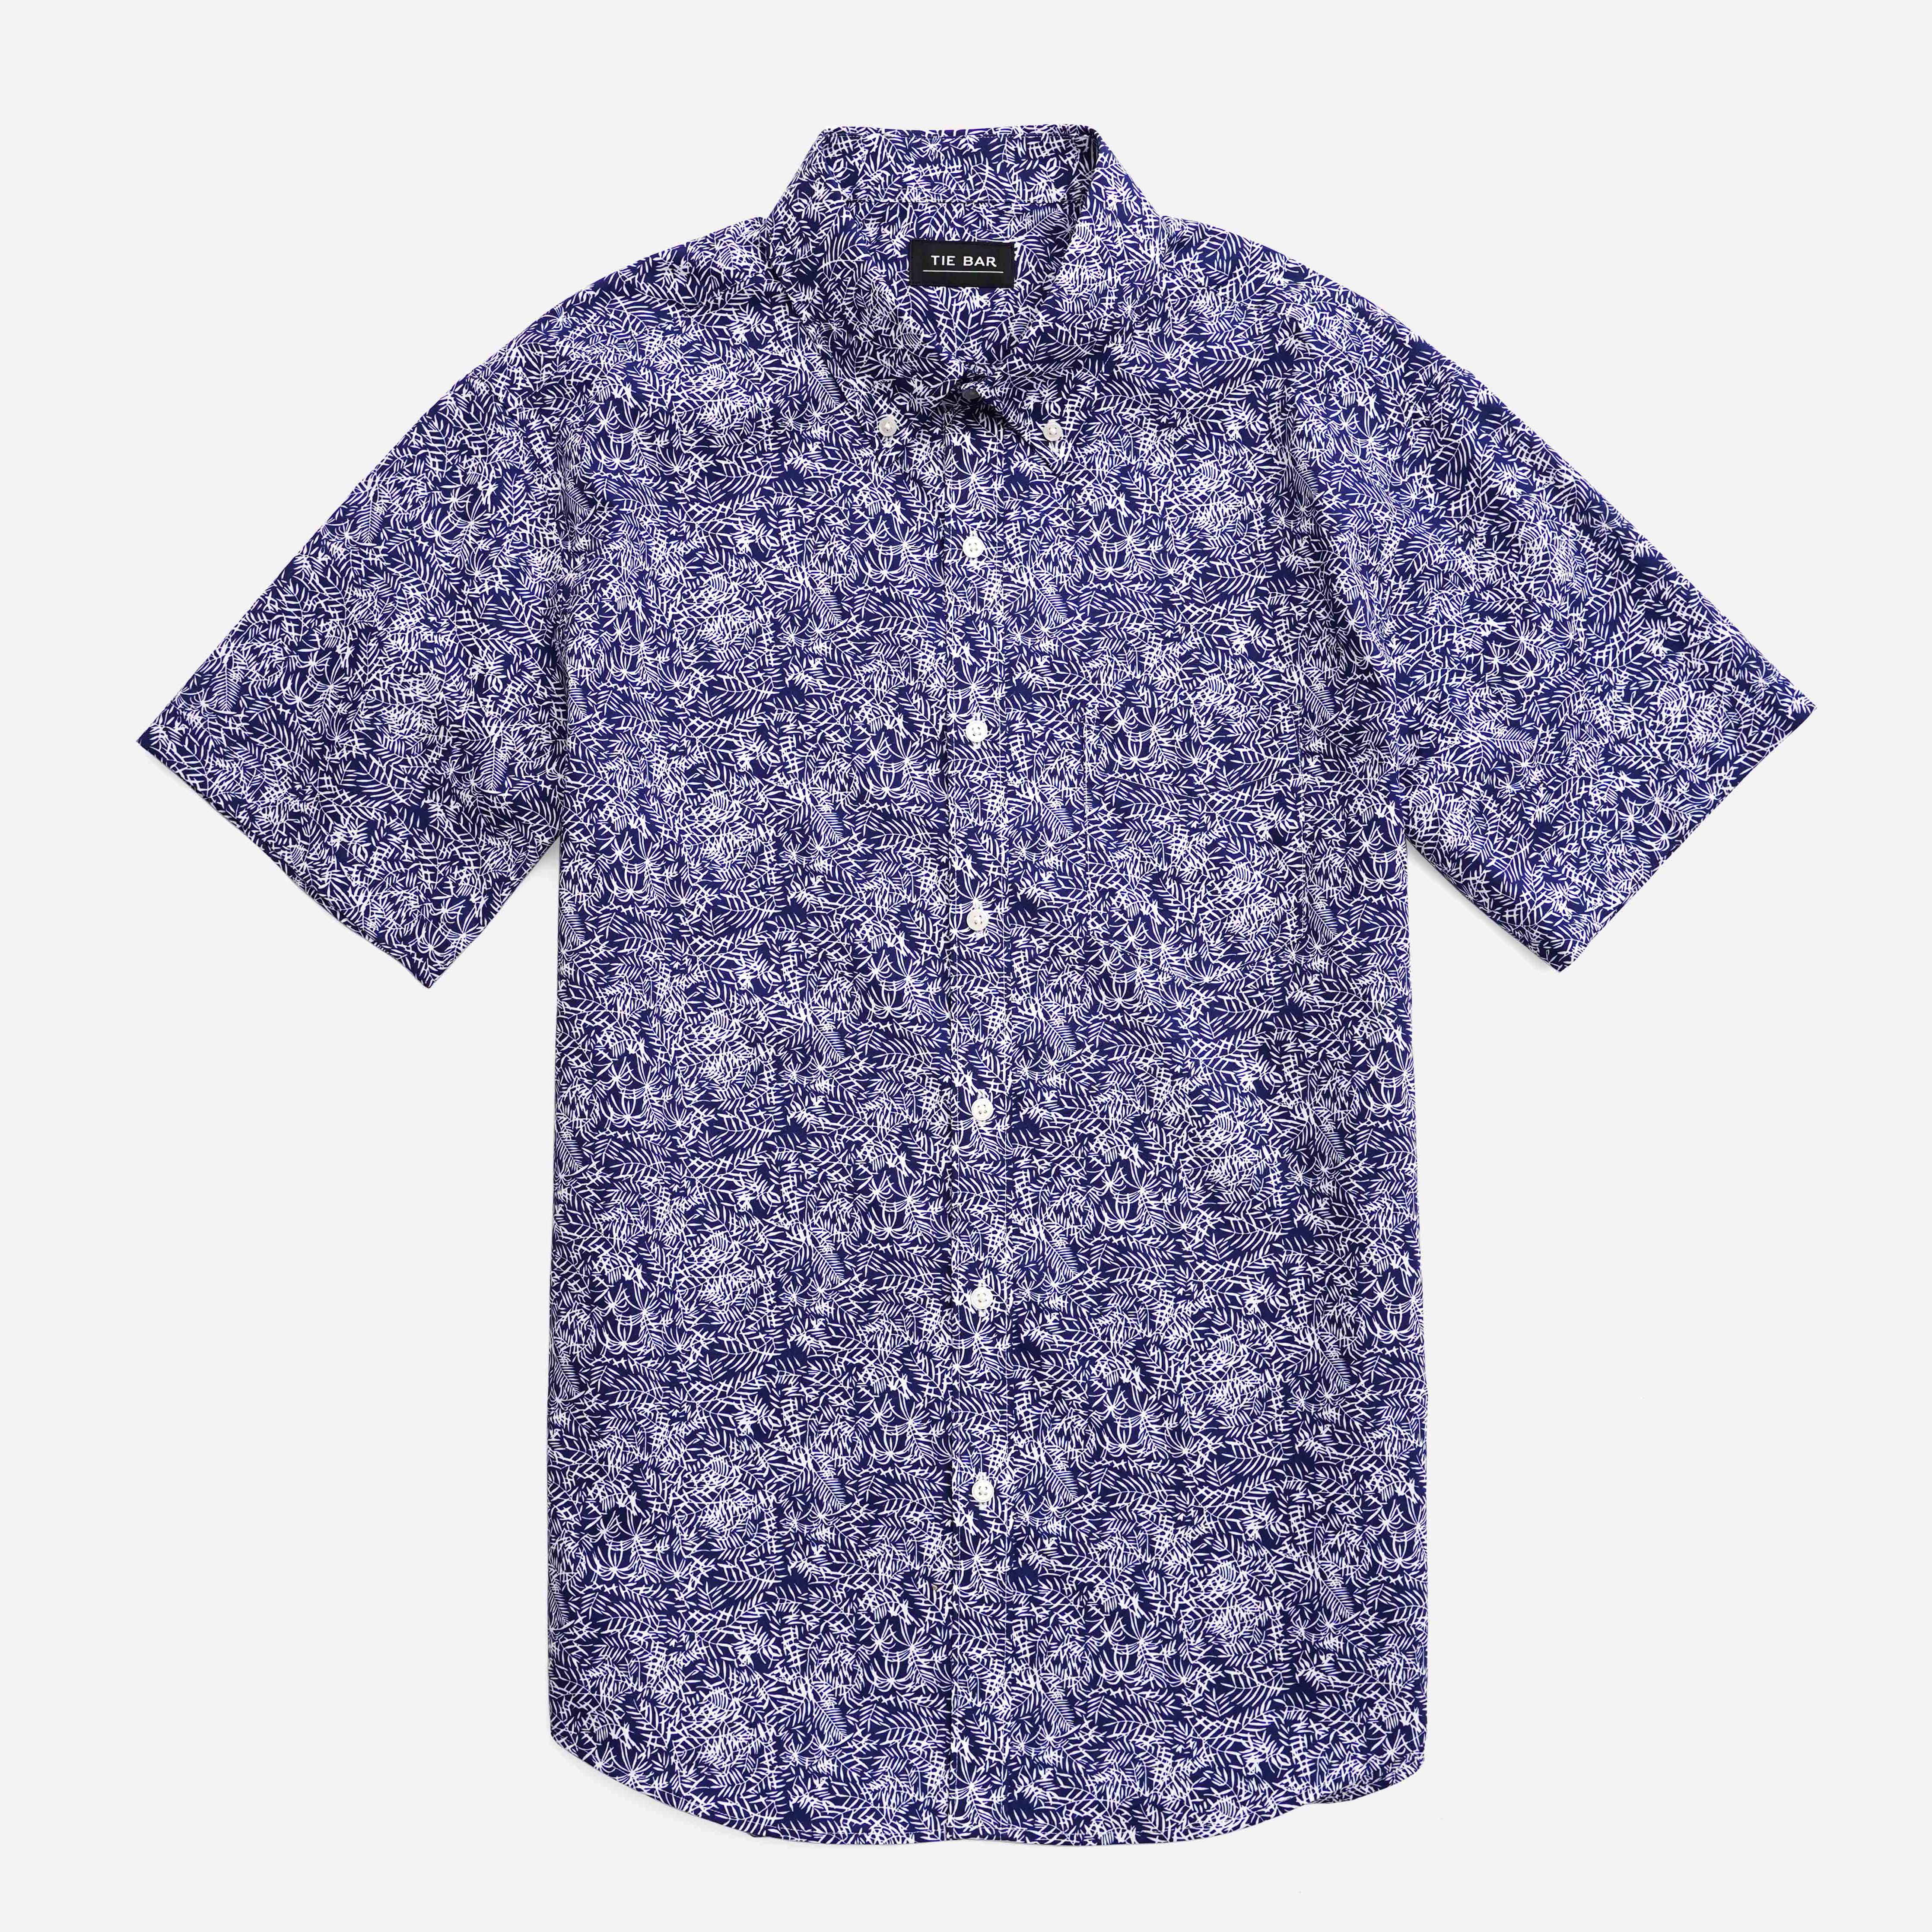 Palm Floral Navy Short Sleeve Shirt | Cotton Shirts | Tie Bar